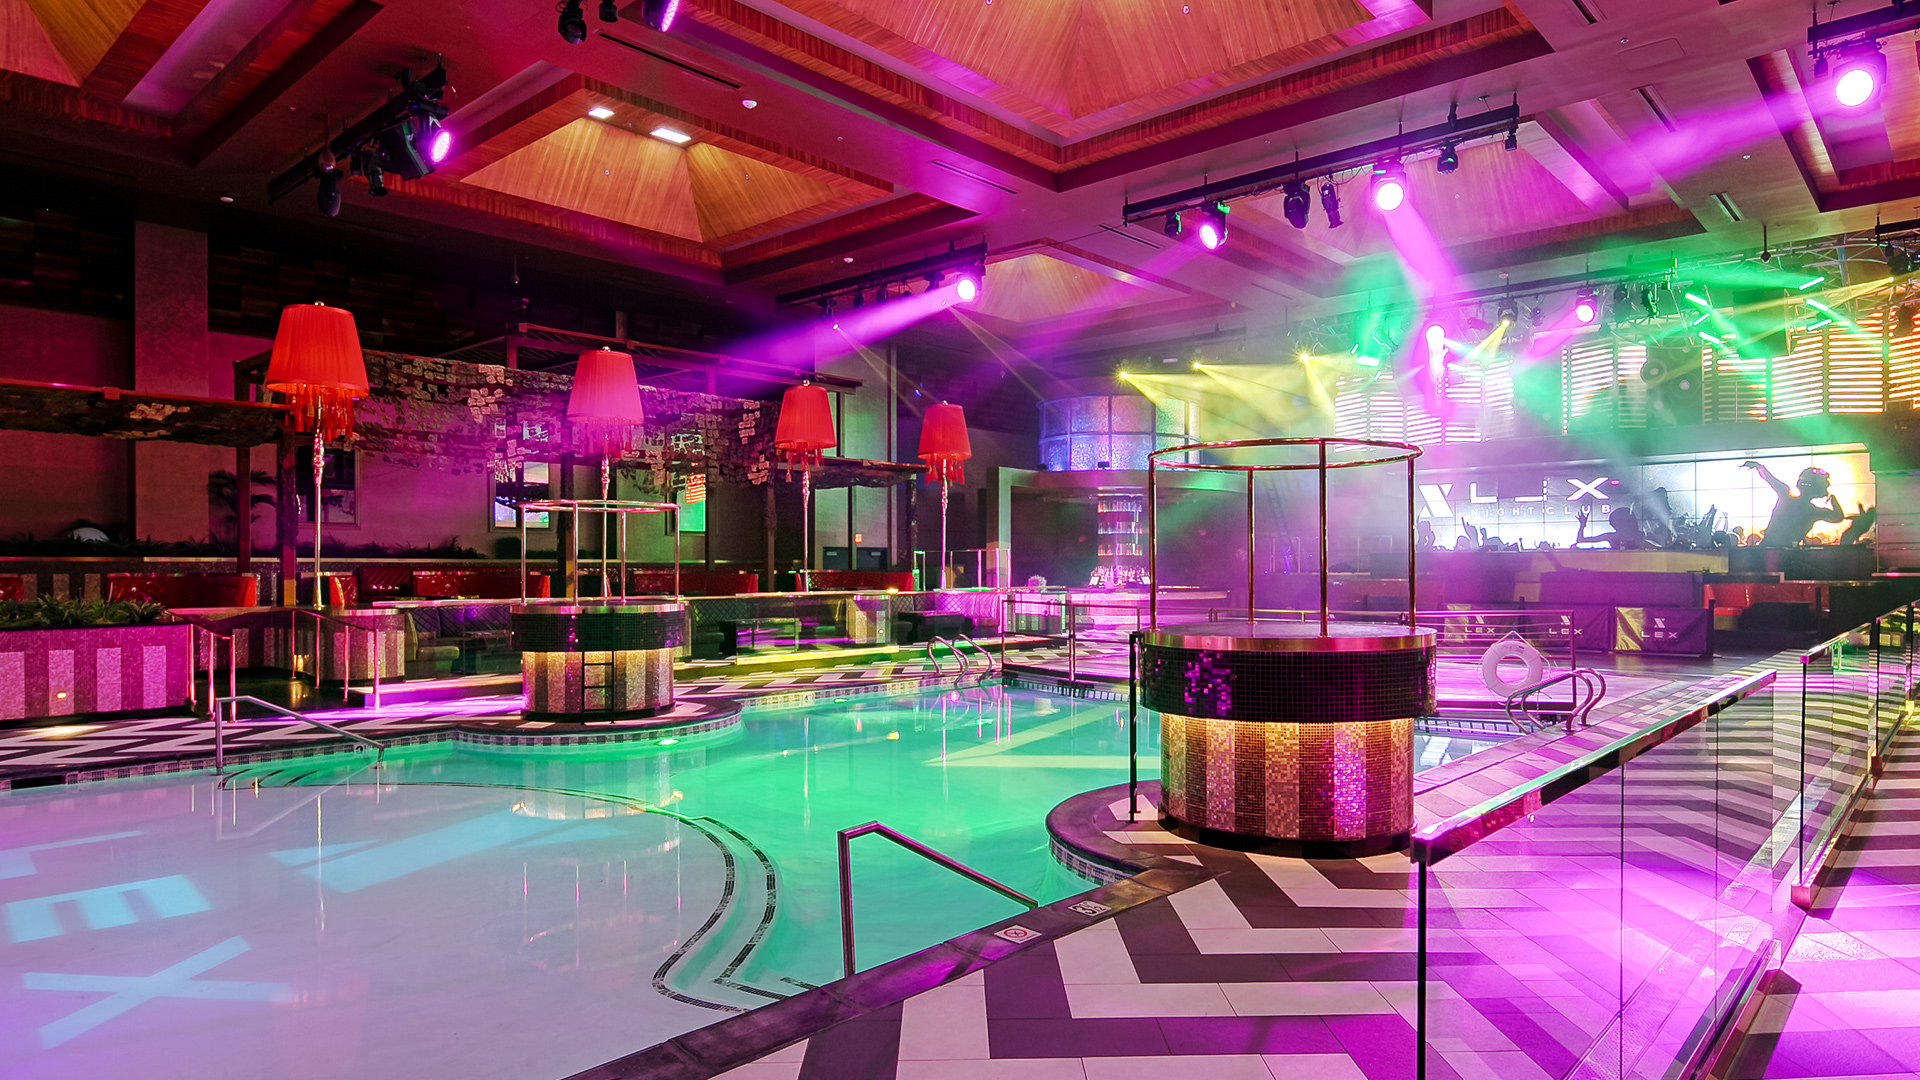 LEX-Nightclub-Main-Room-with-Pool-and-Dance-Floor-at-Grand-Sierra-Resort_1920x1080